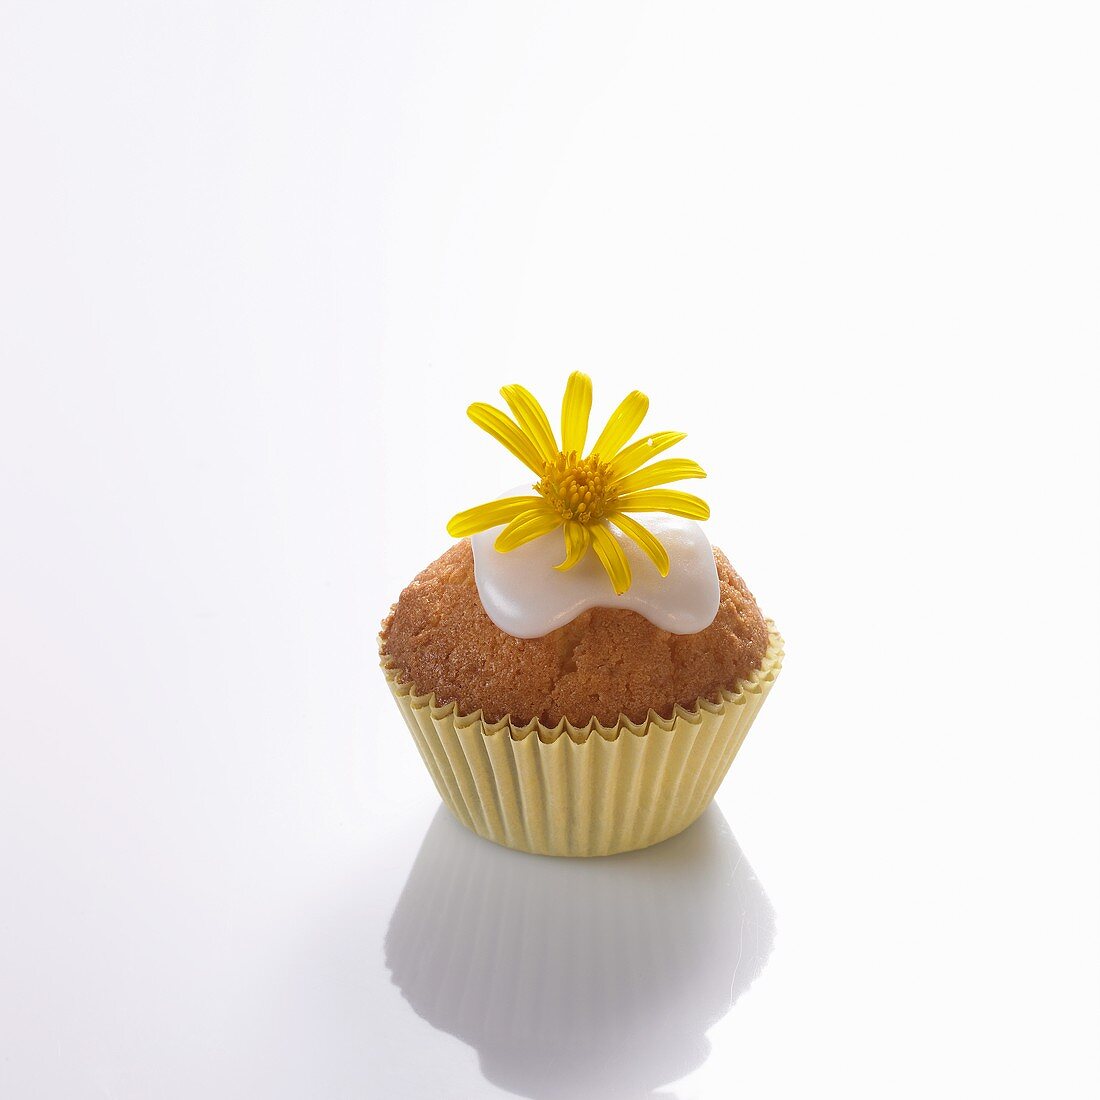 Mini-muffin with yellow daisy